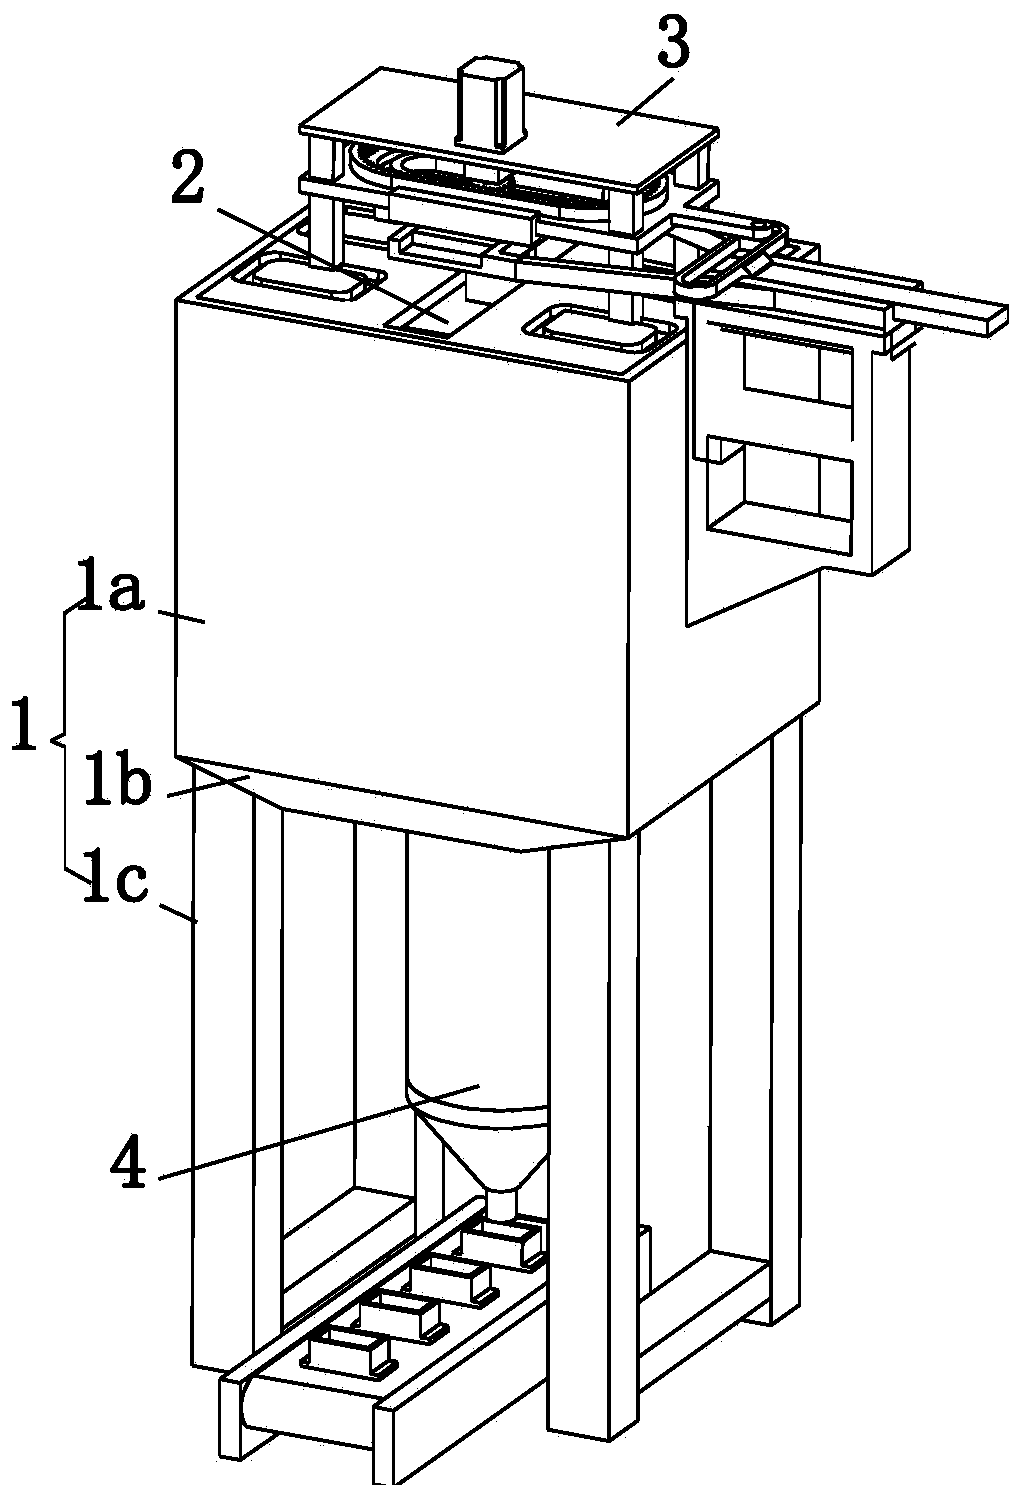 Working method of vertical plastic molding machine